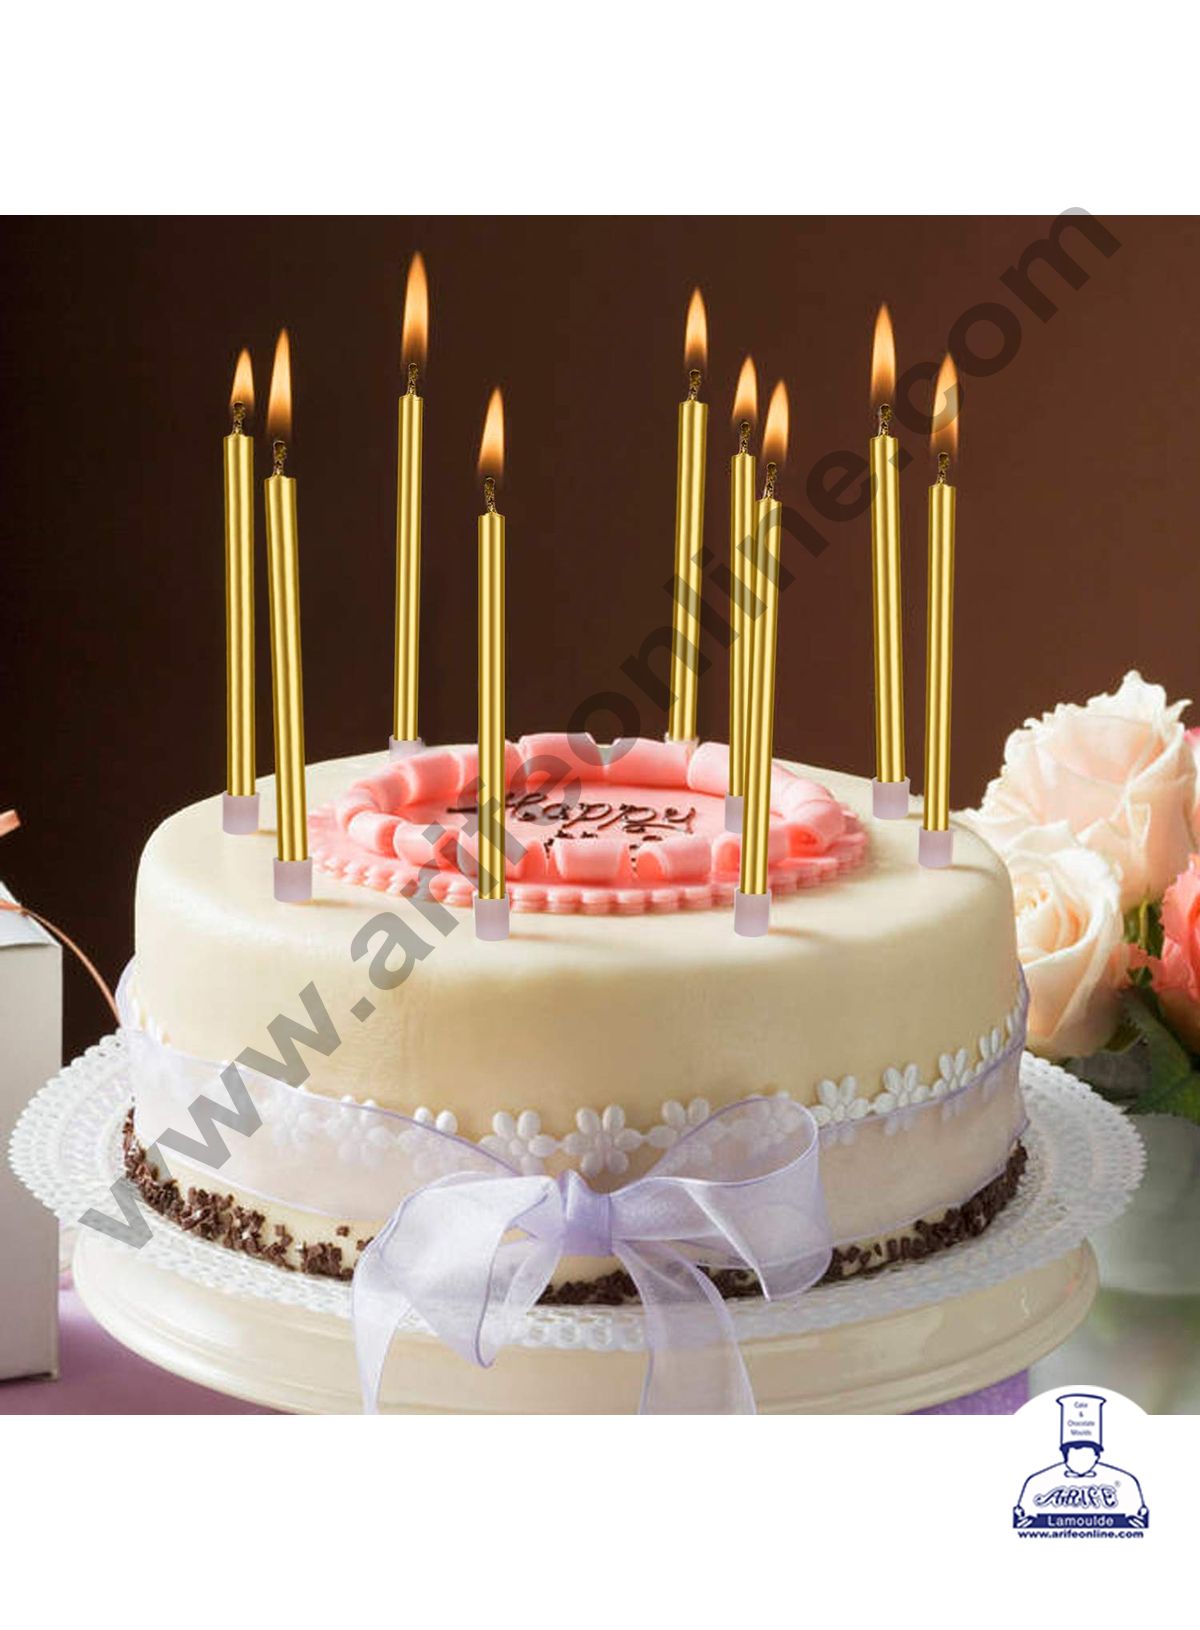 600+ Free Birthday Candles & Birthday Cake Images - Pixabay